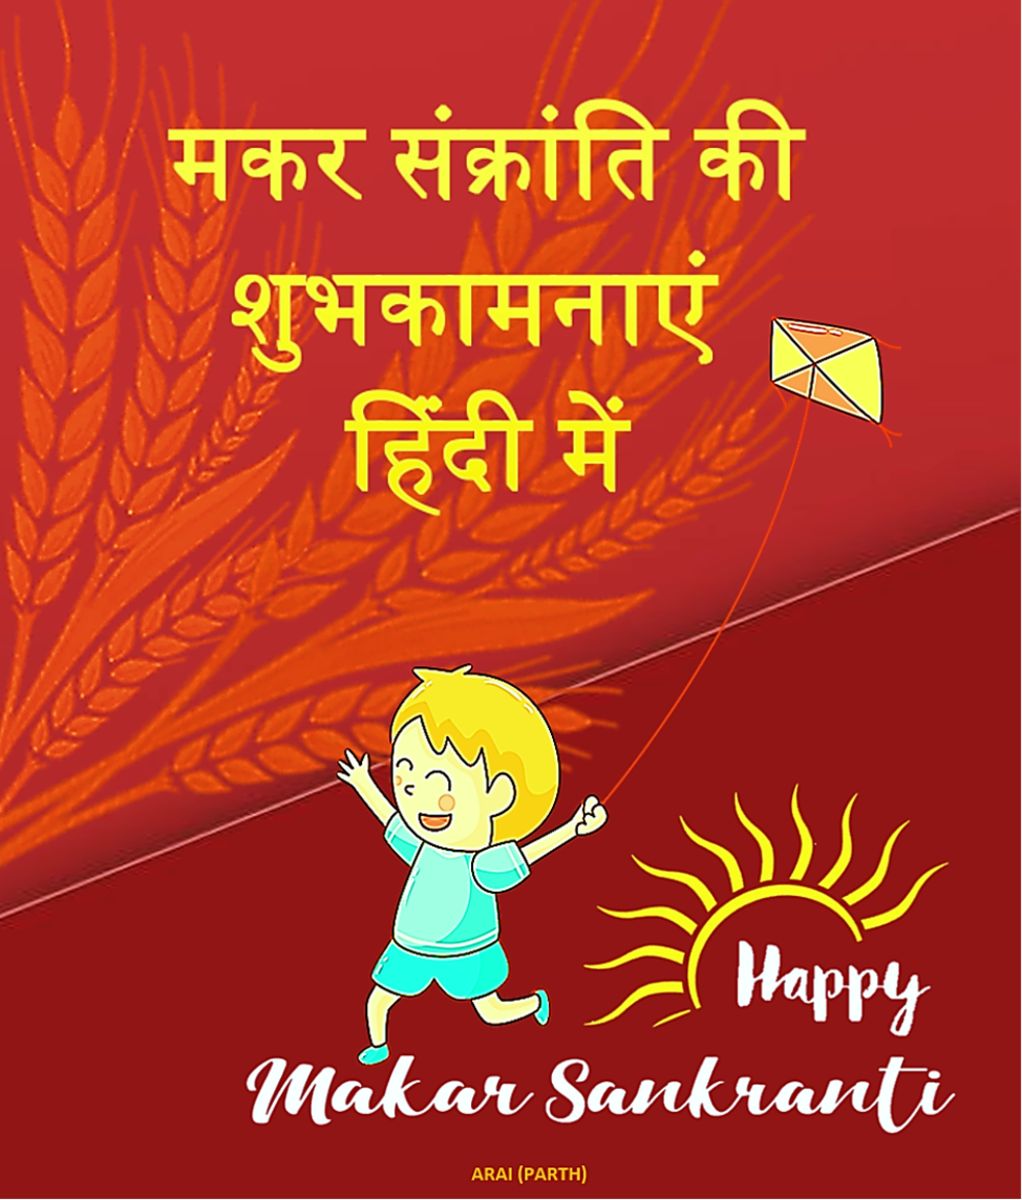 Happy Makar Sankranti Wishes and Greetings in Hindi Language